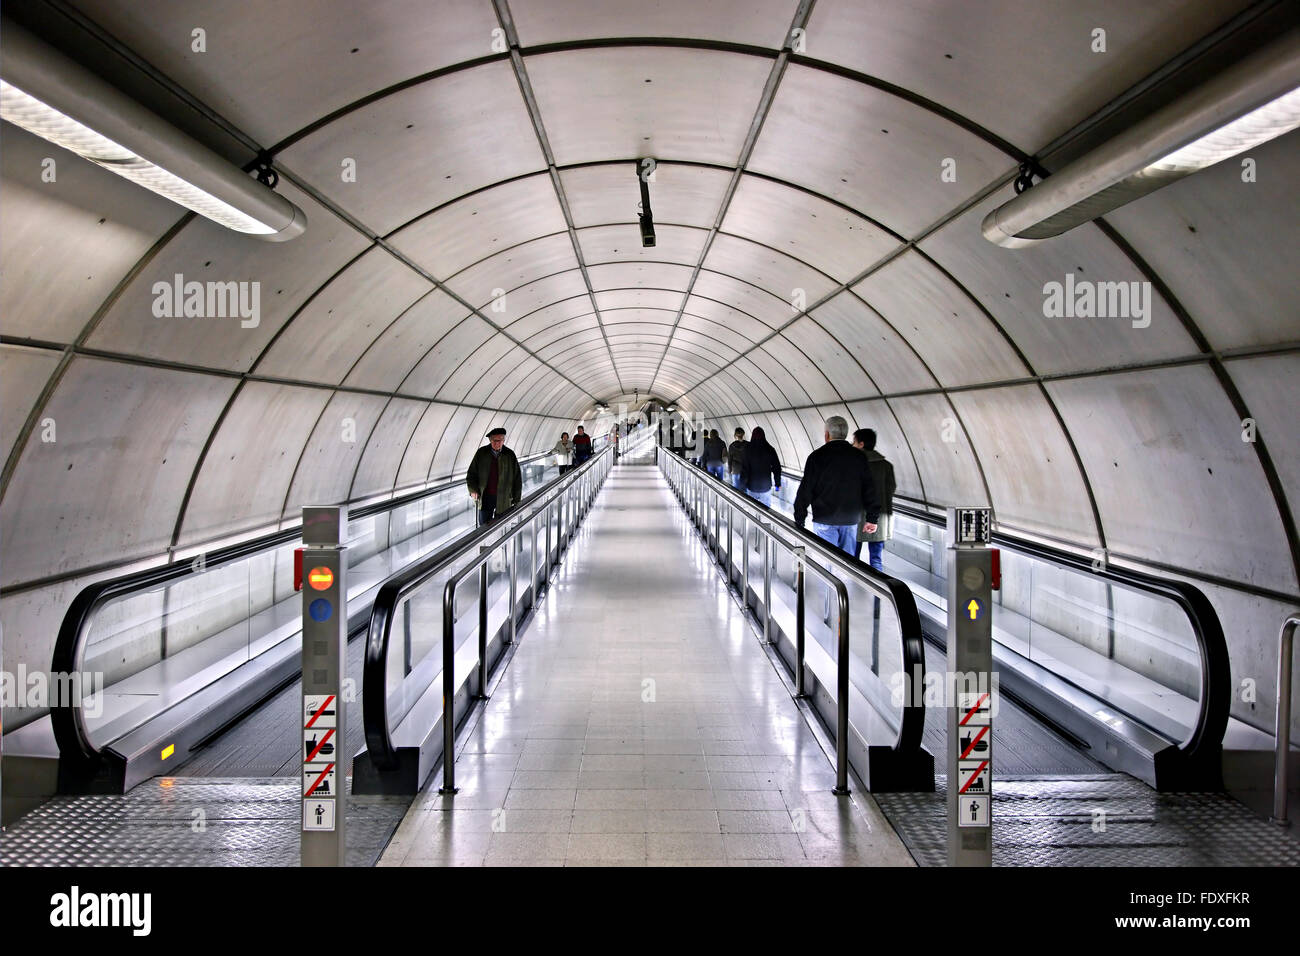 Der Tunnel "Casco Viejo" u-Bahnstation in Spanien, Bilbao, Baskenland (Pais Vasco). Stockfoto